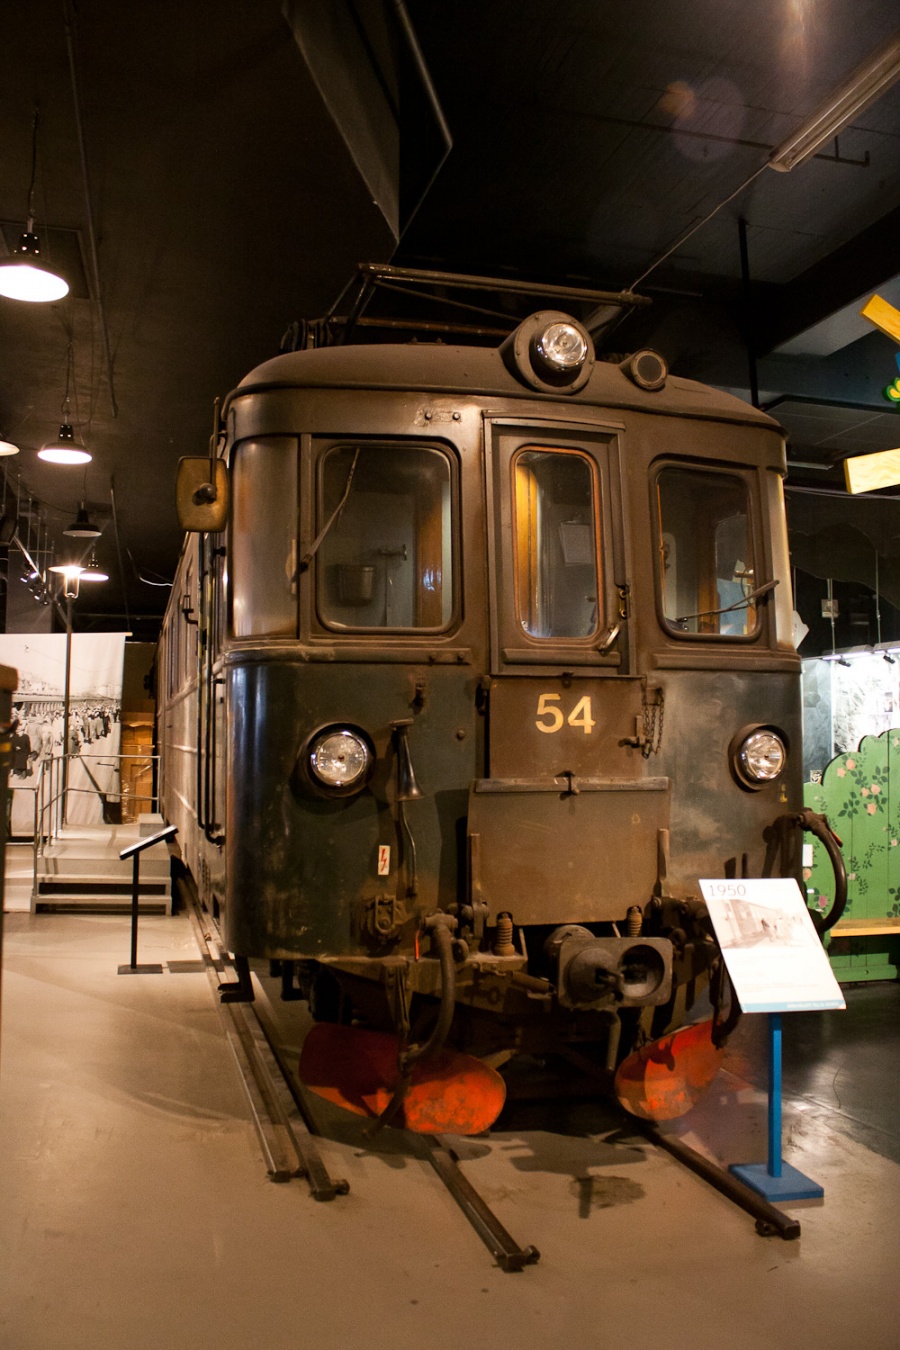 X7p 54
25.04.2015
Museum of Stockholm transport
Narrow gauge (891 mm) electric railcar, made for Roslagsbanan in 1949.
